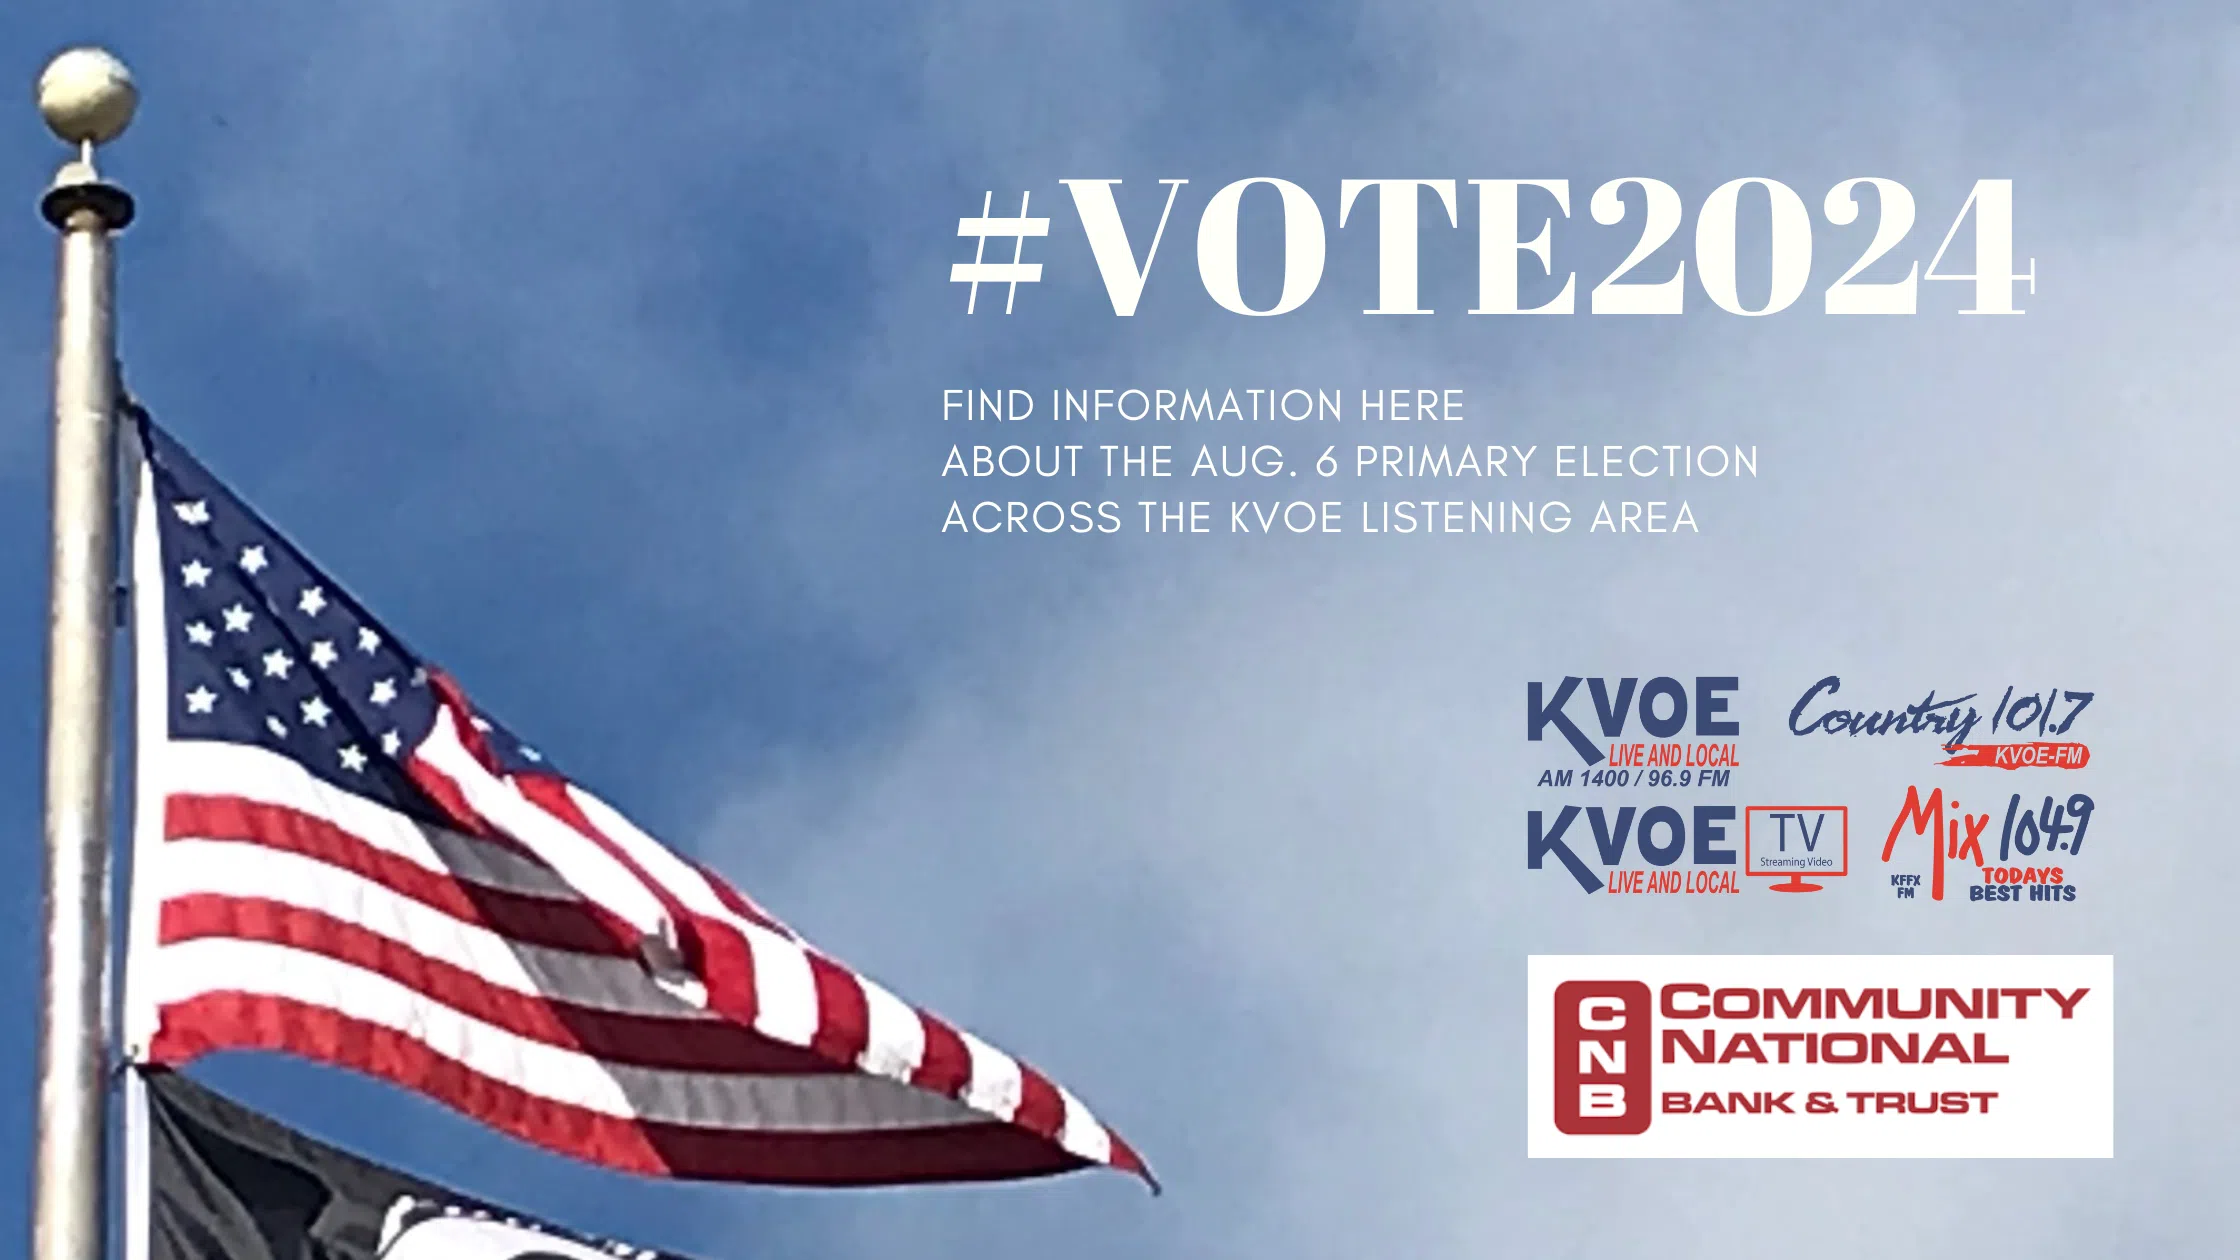 KVOE's 2024 Voter Information Guide courtesy of Community National Bank